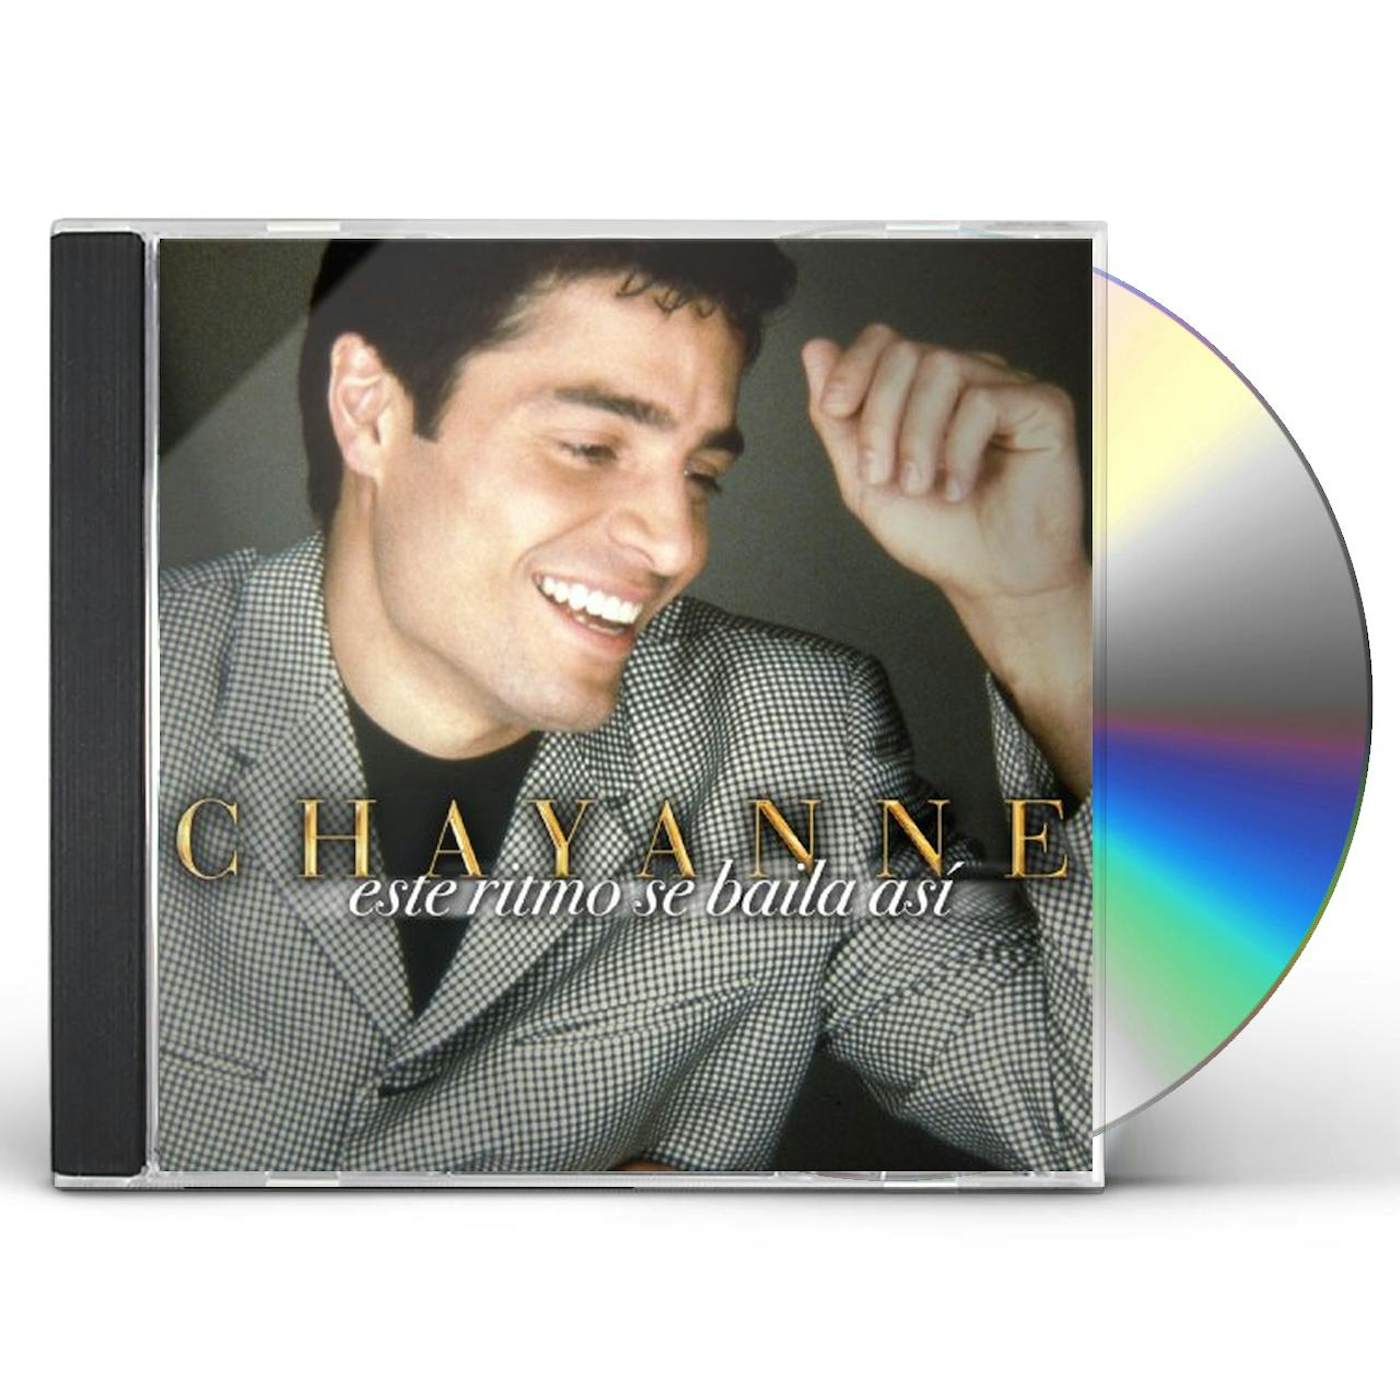 Chayanne ESTE RITMO SE BAILA ASI CD